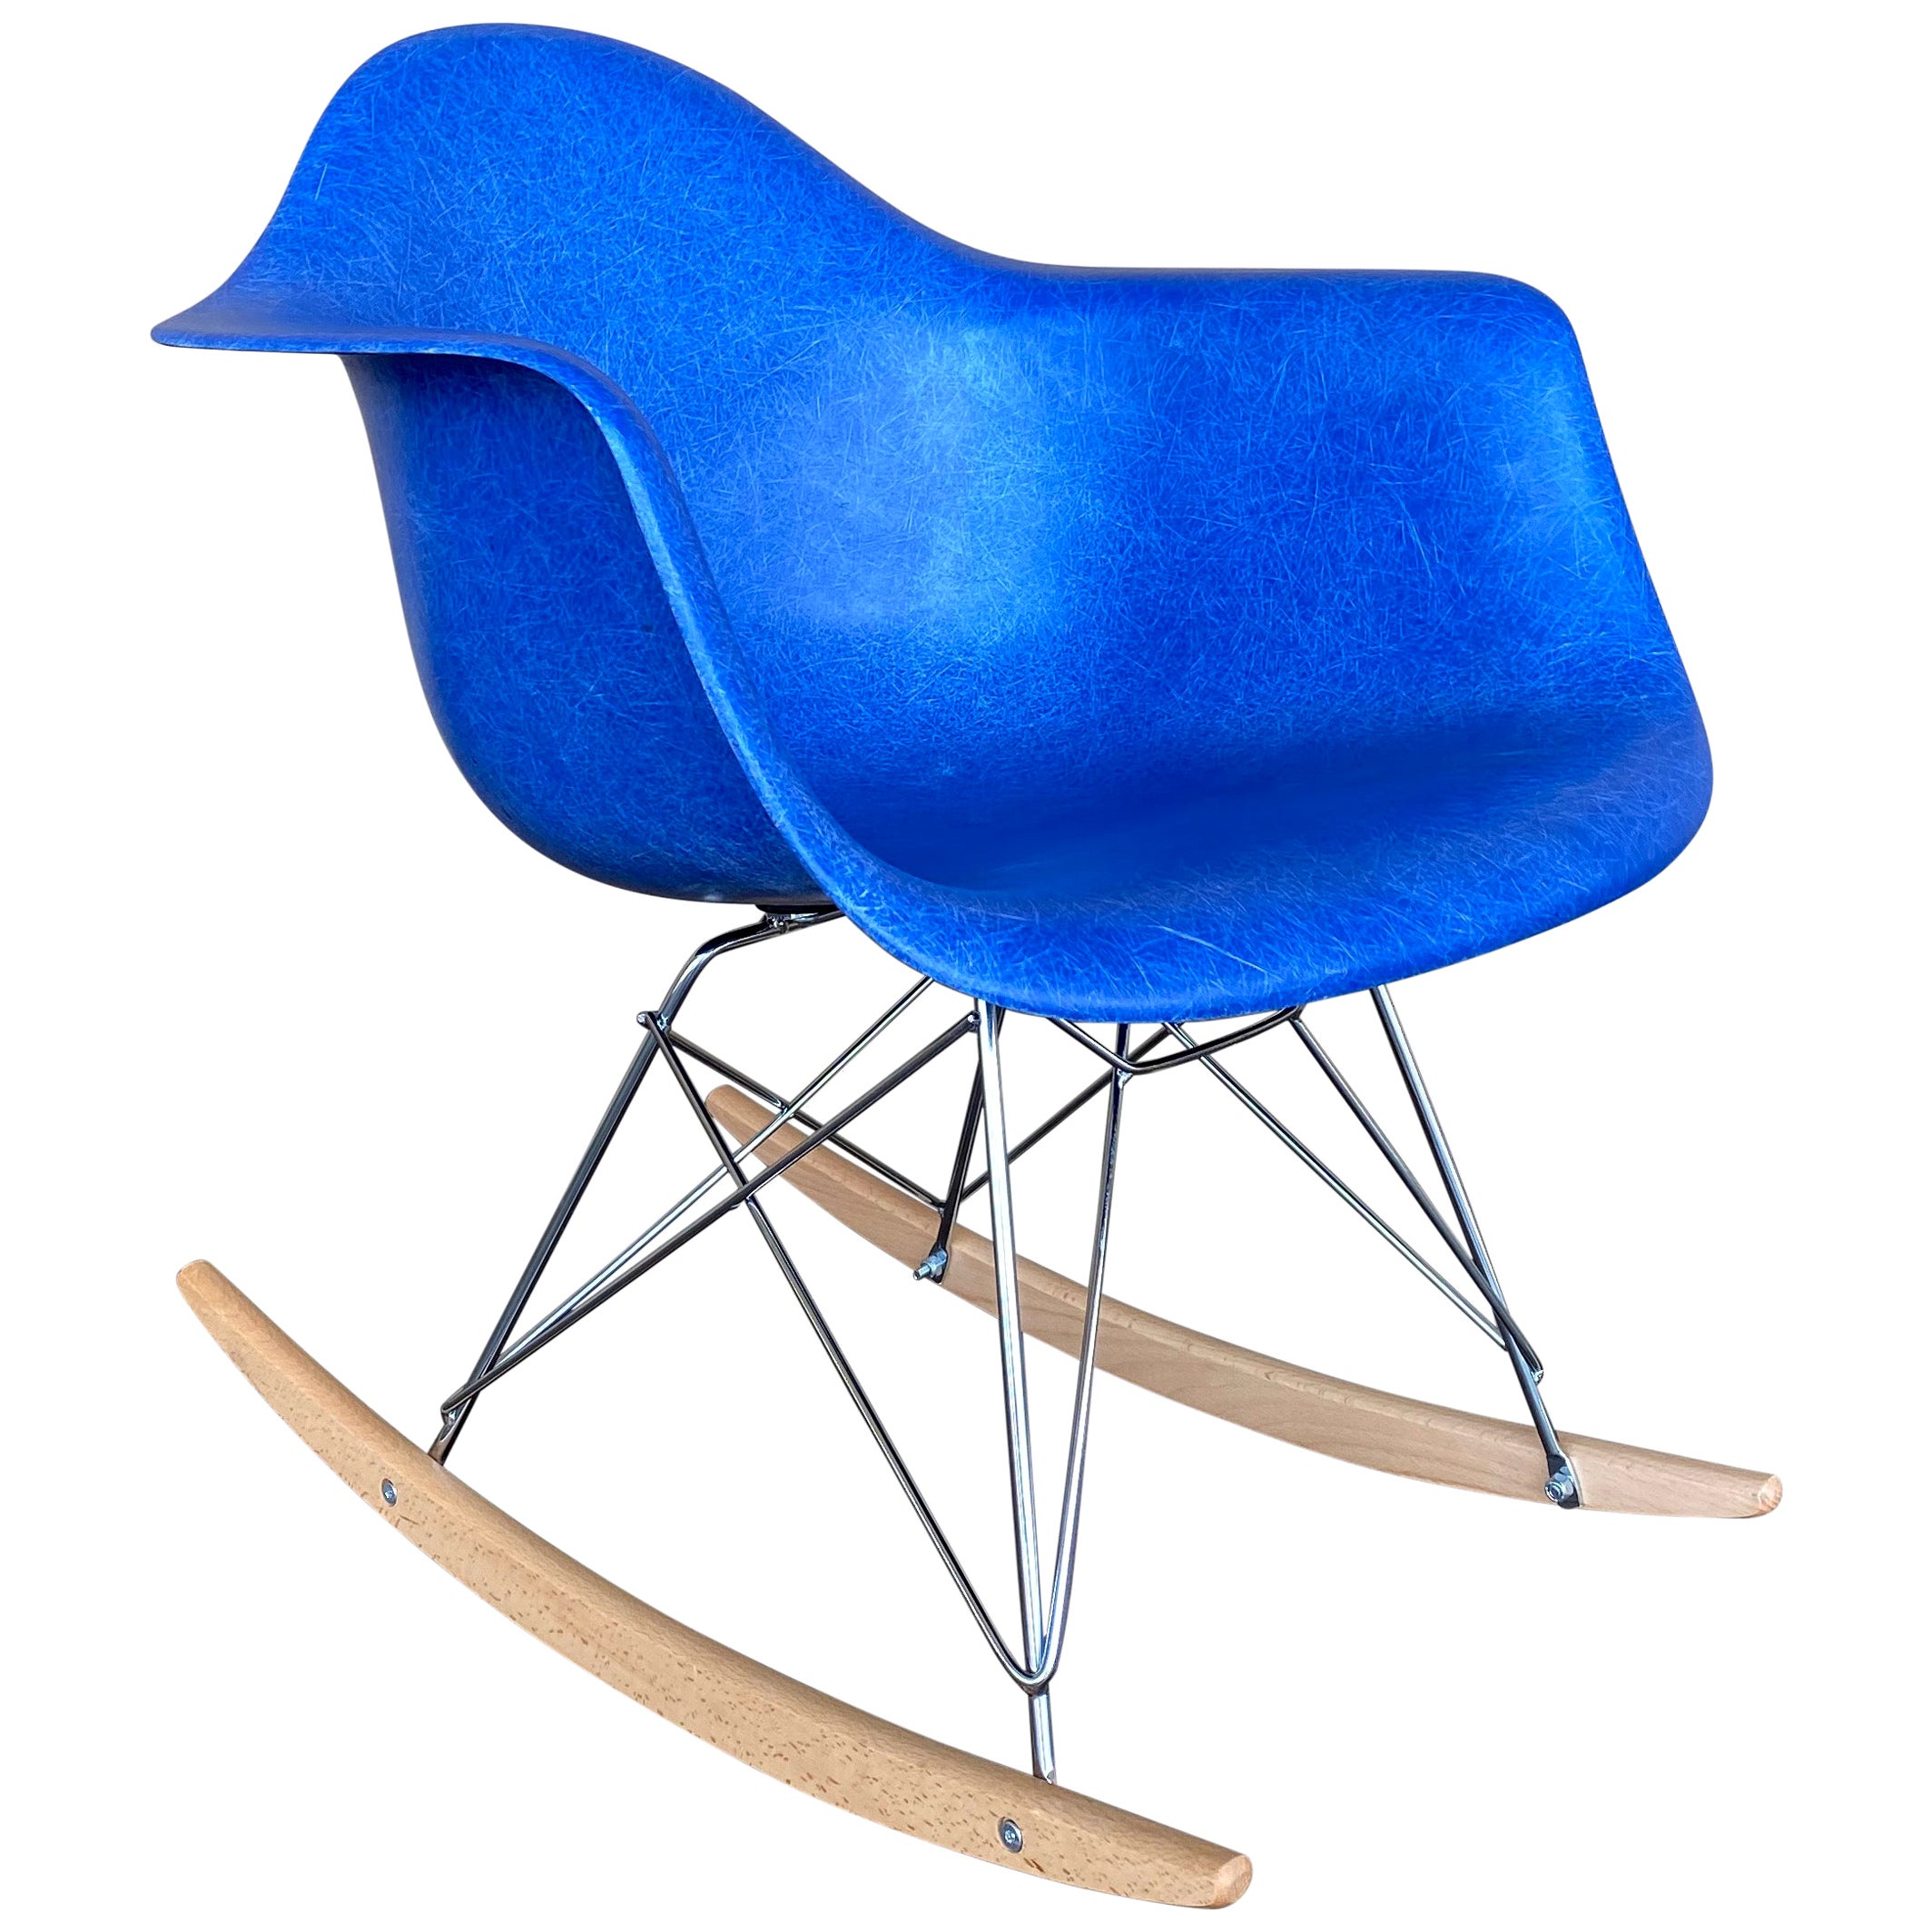 2 Herman Miller Eames Ultramarine Fiberglass RAR Rocking Chairs